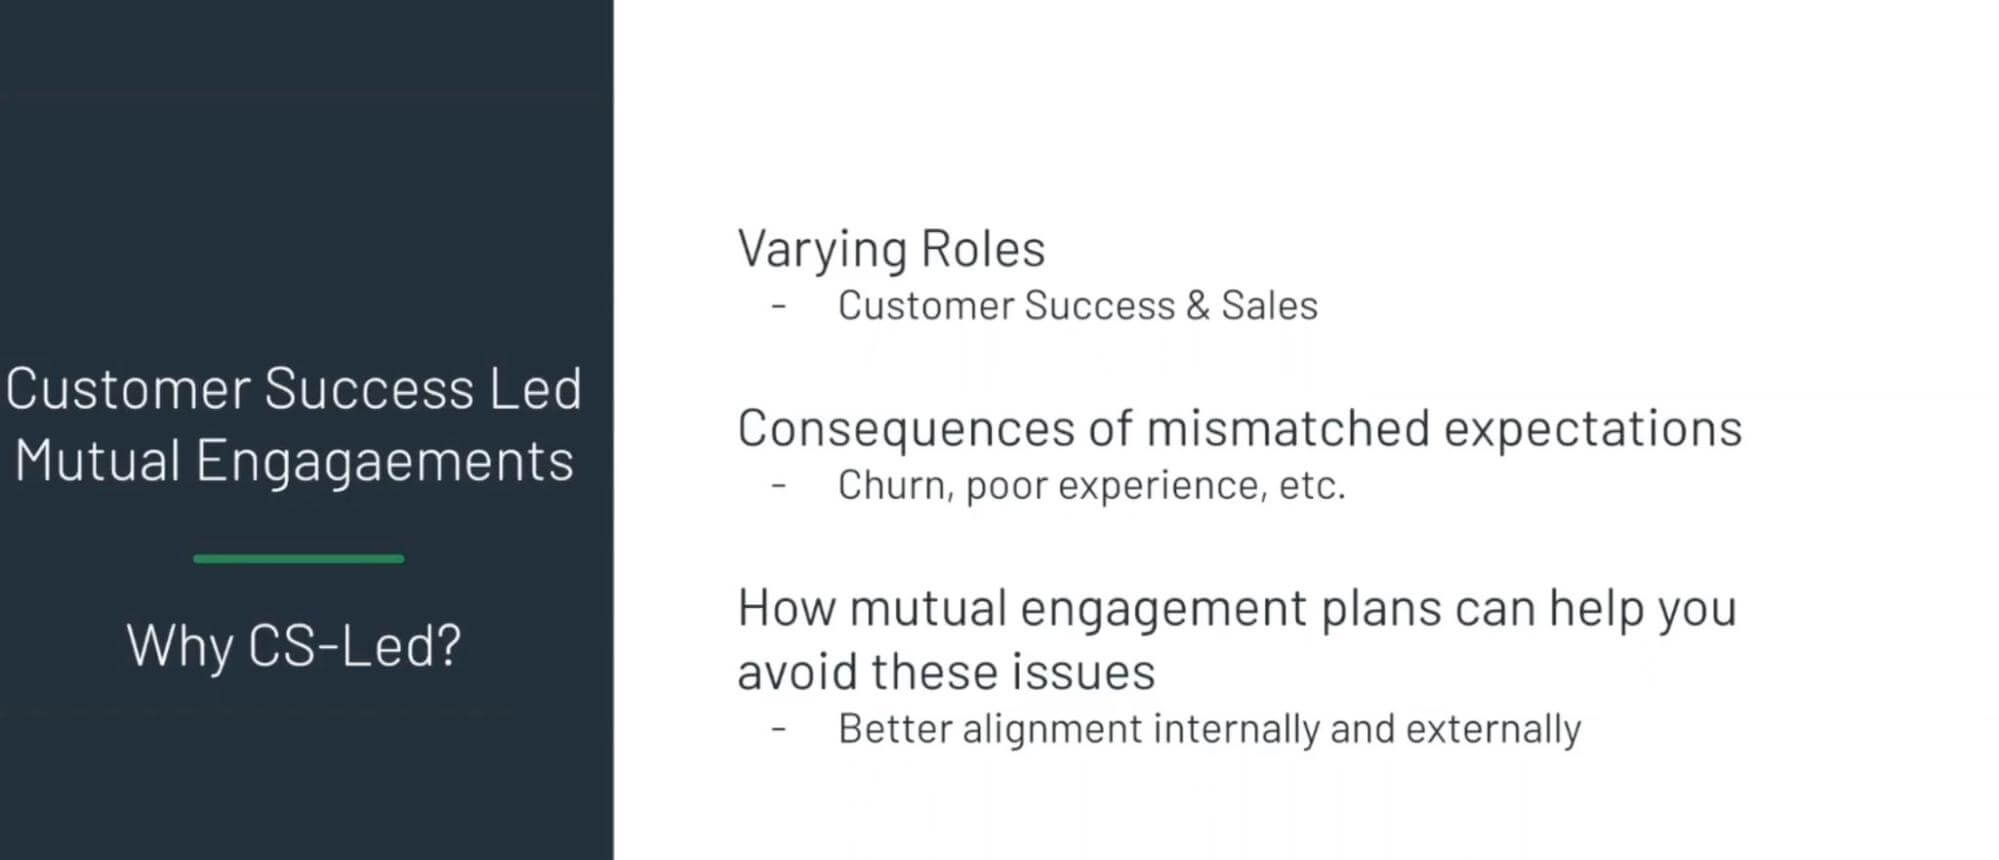 Customer success-led mutual engagements: why CS-led?